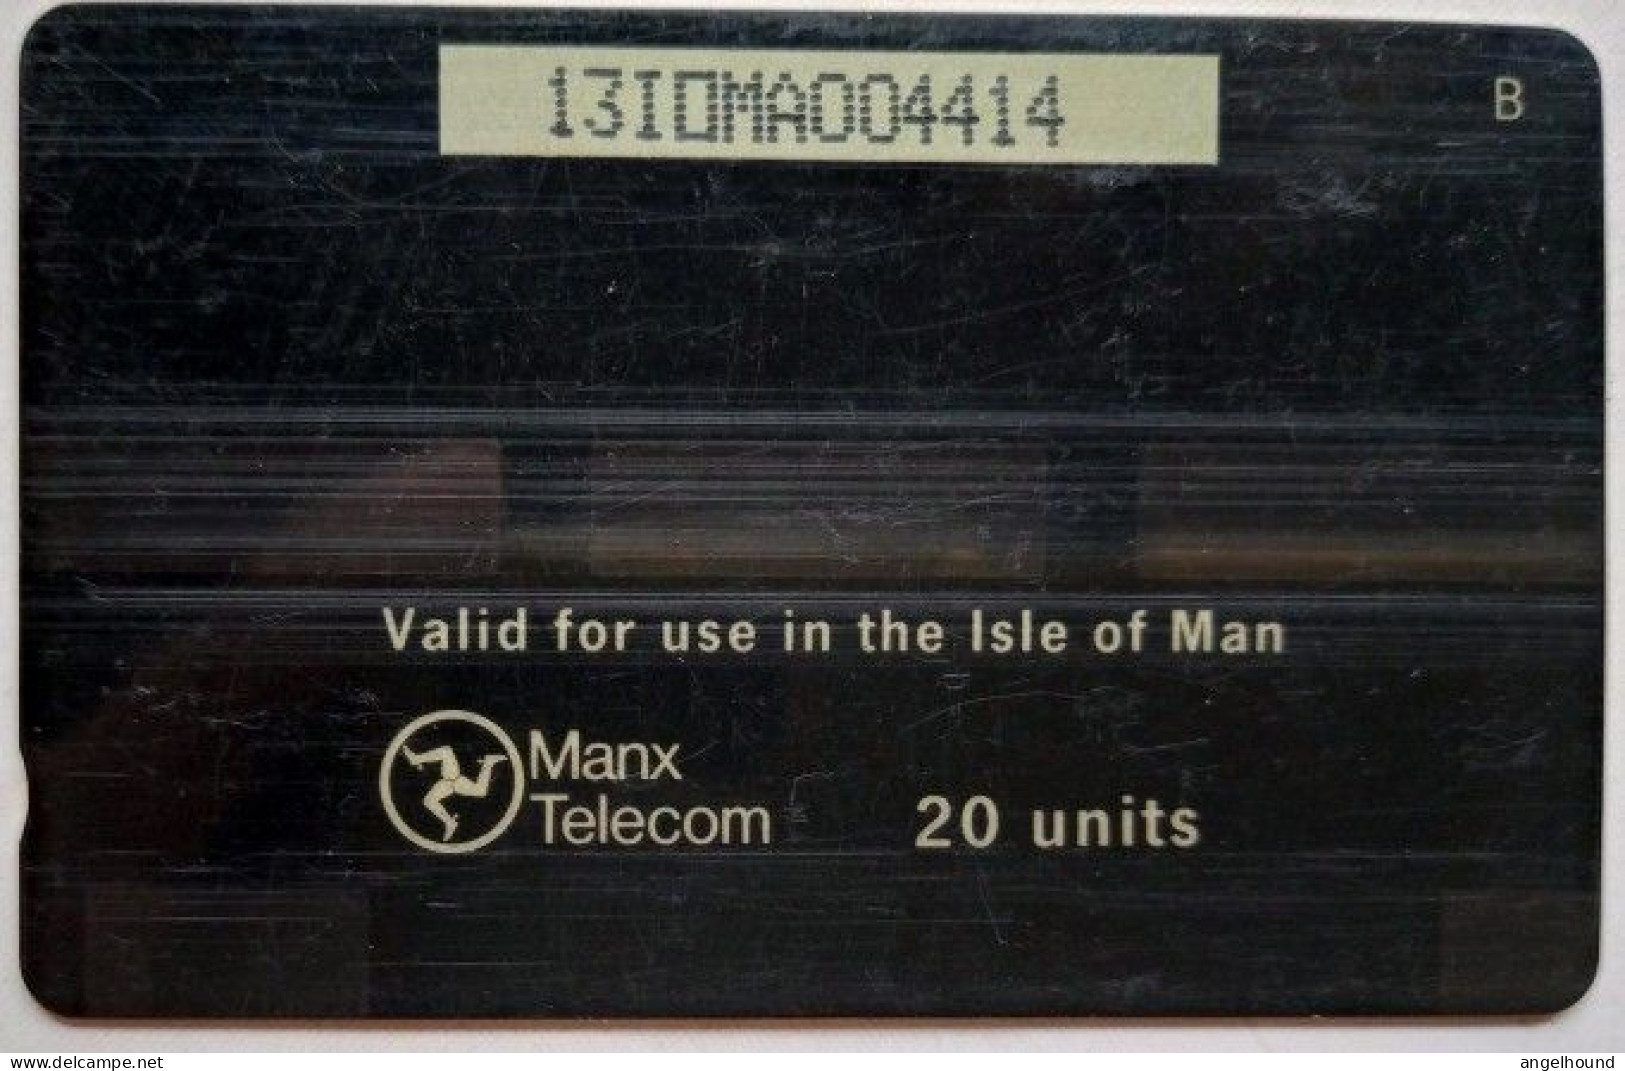 Isle Of Man £2  13IOMA Phonecard Collectors Series " Steve Hislop 1991 " - Isola Di Man